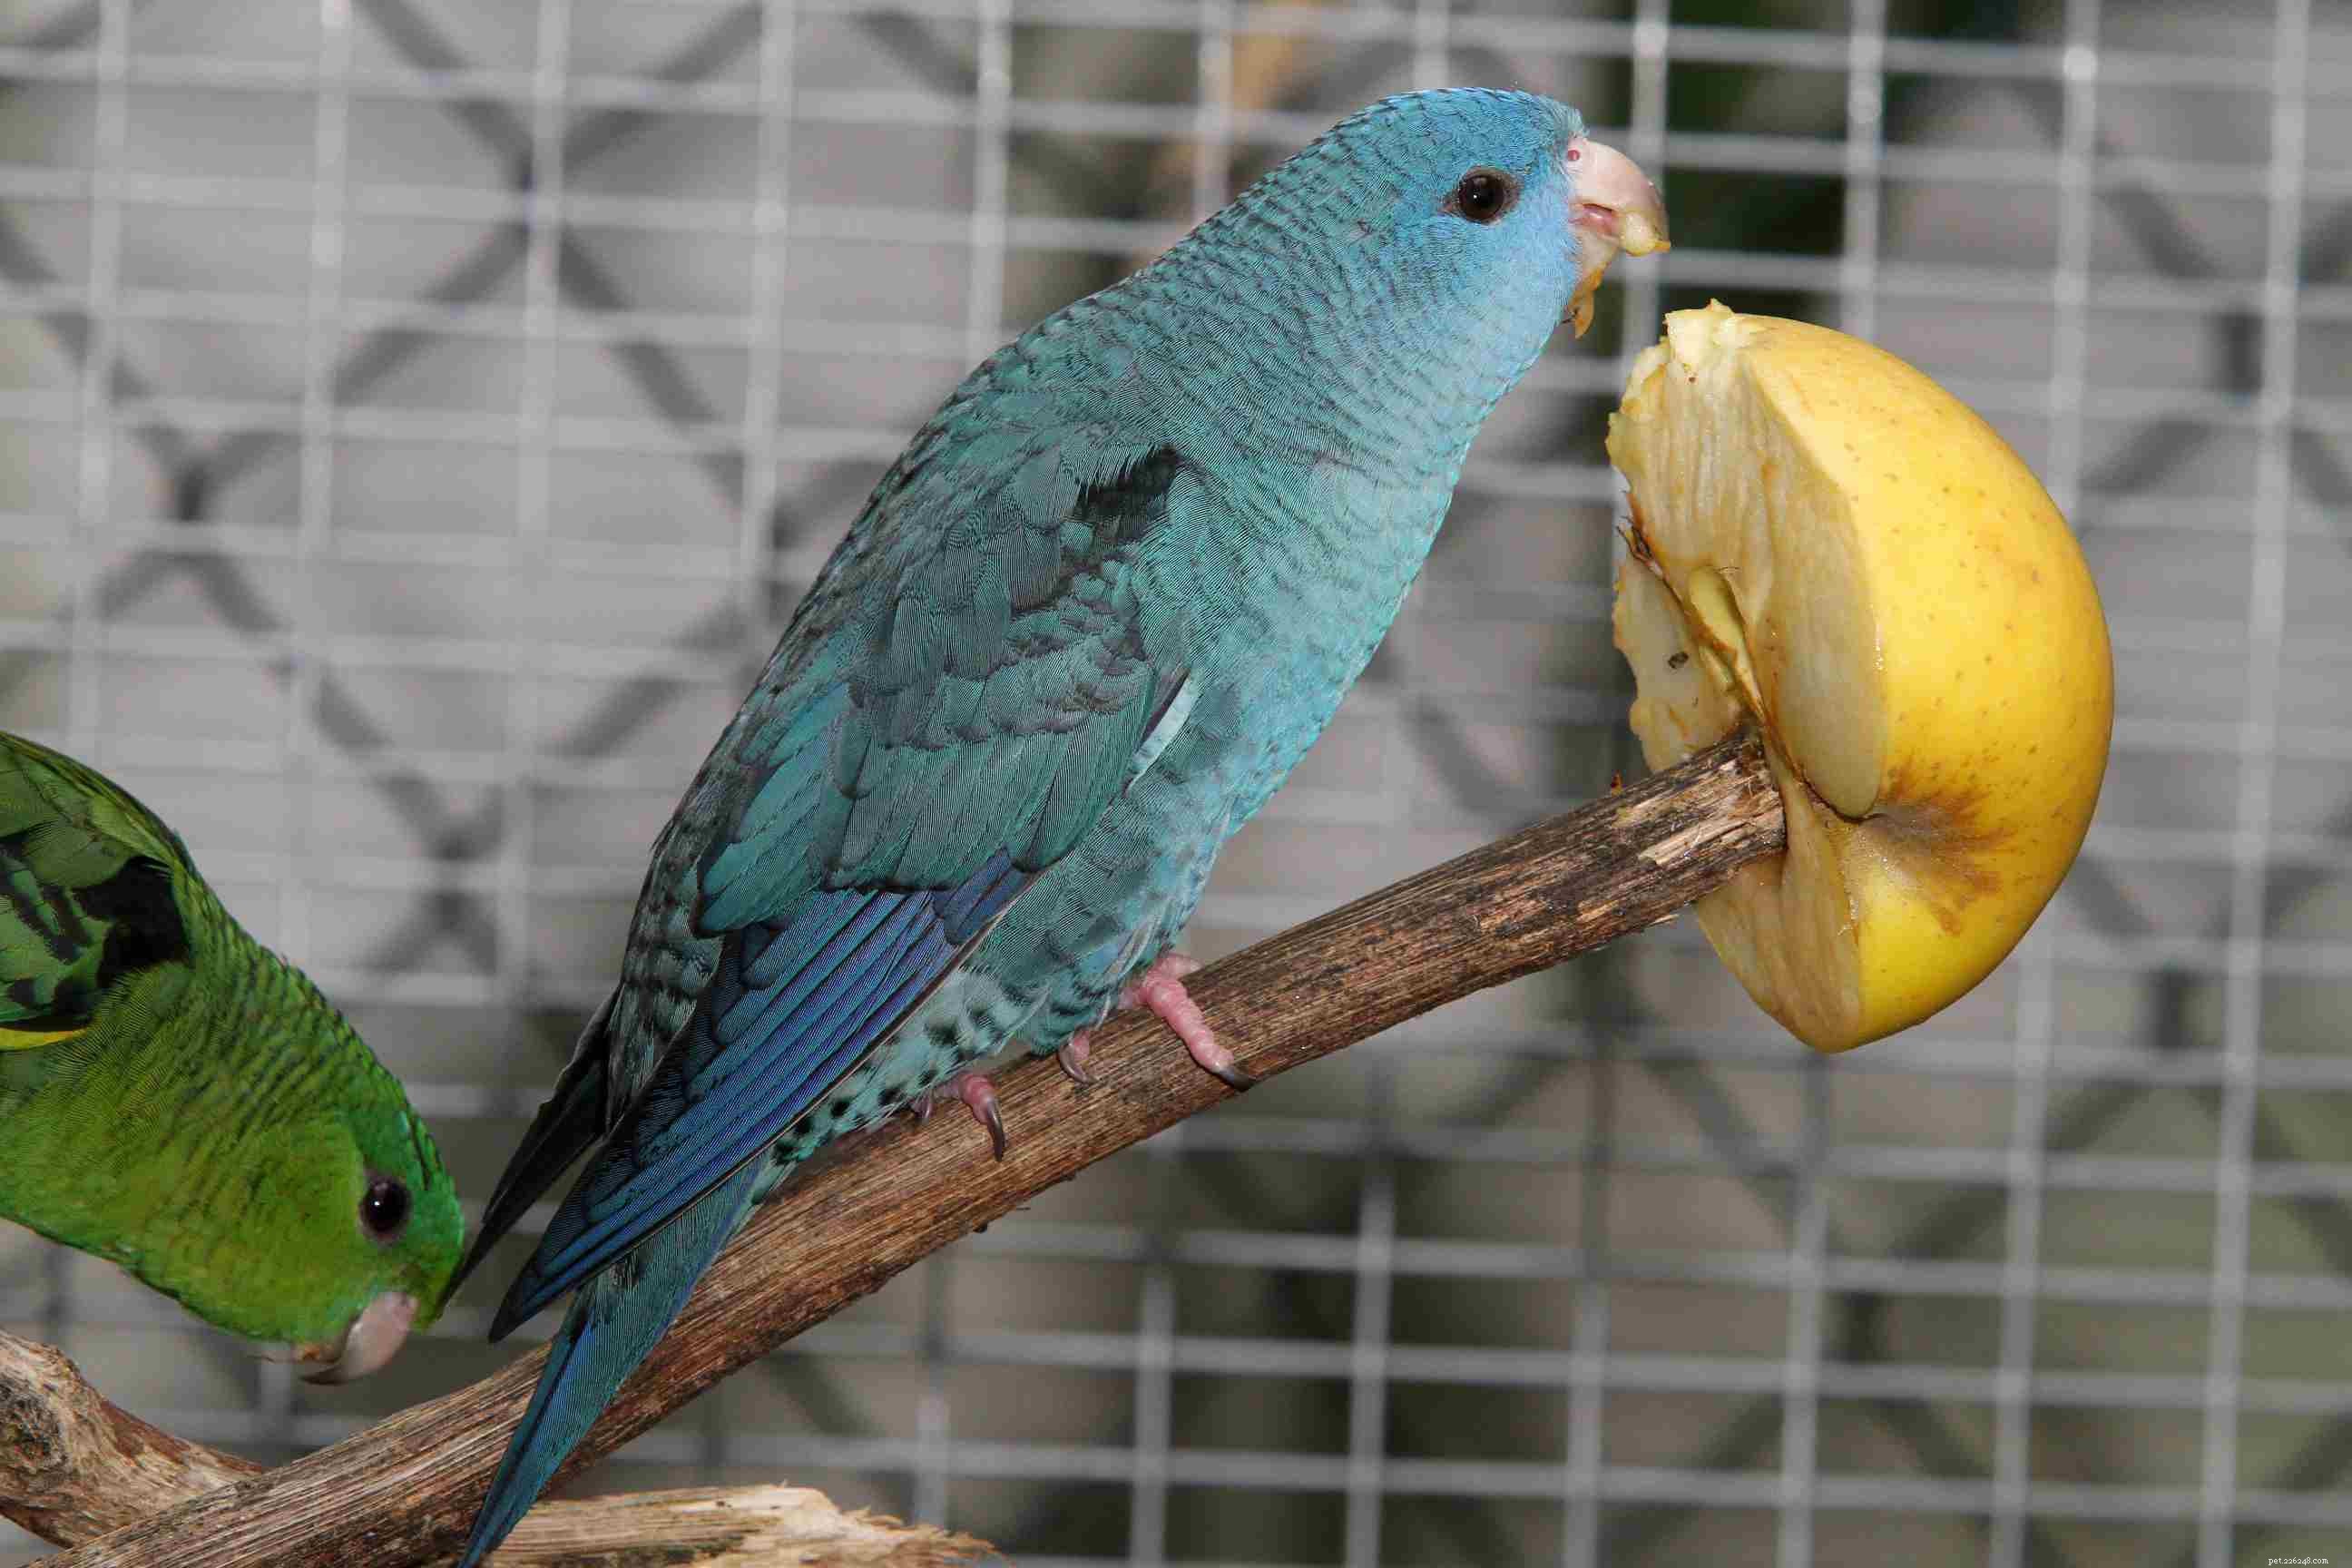 Mutazioni di colore nei pappagalli e in altri uccelli